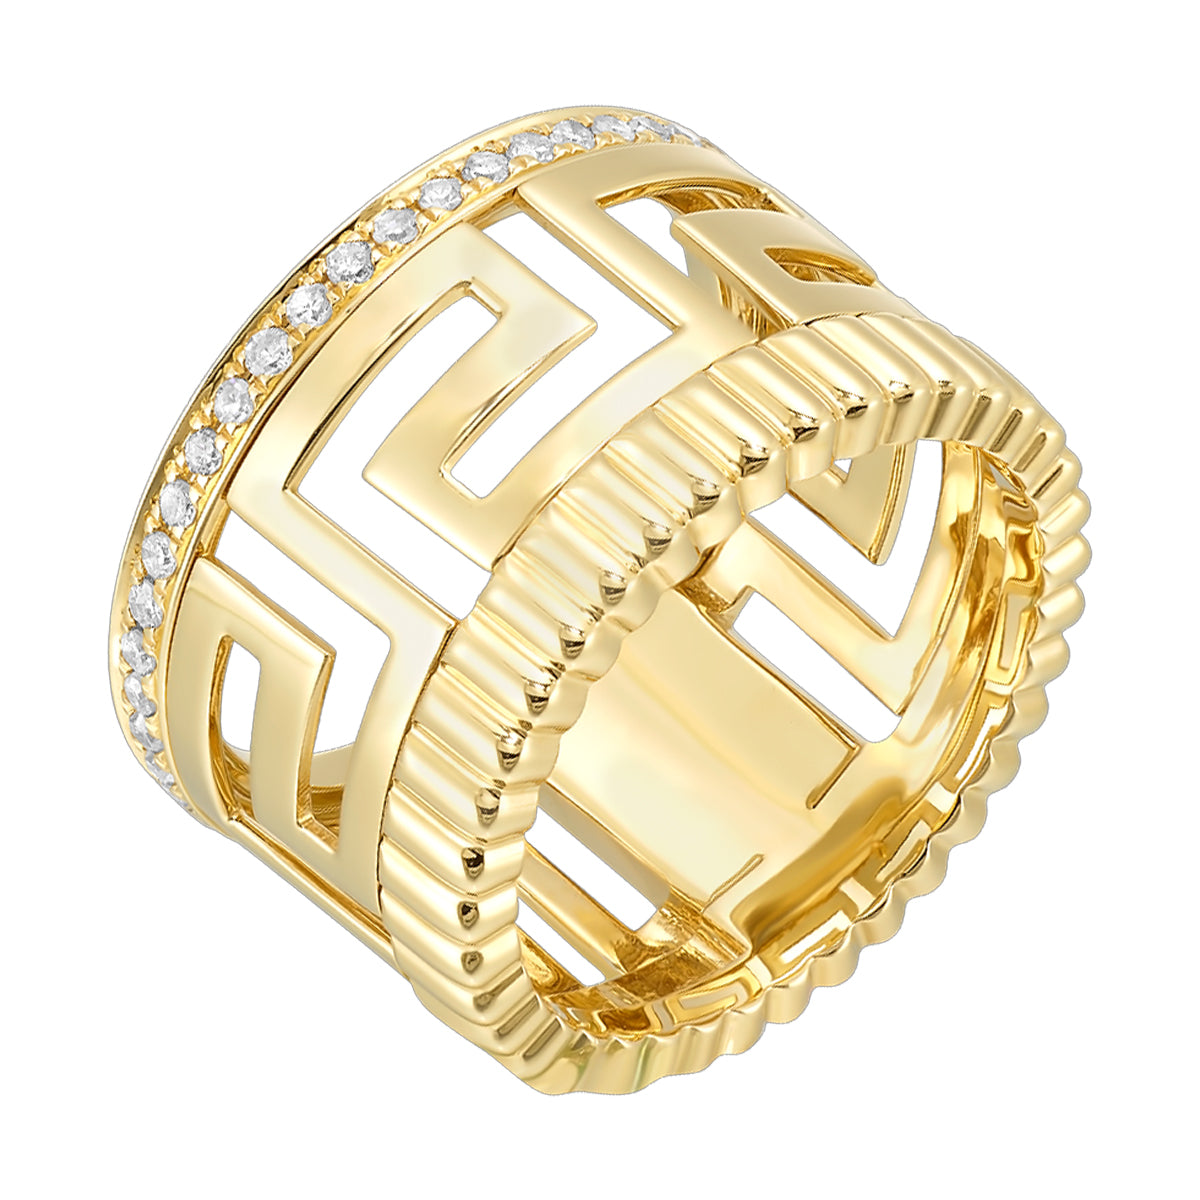 14K Yellow Gold Diamond 0.33 Ct Ring